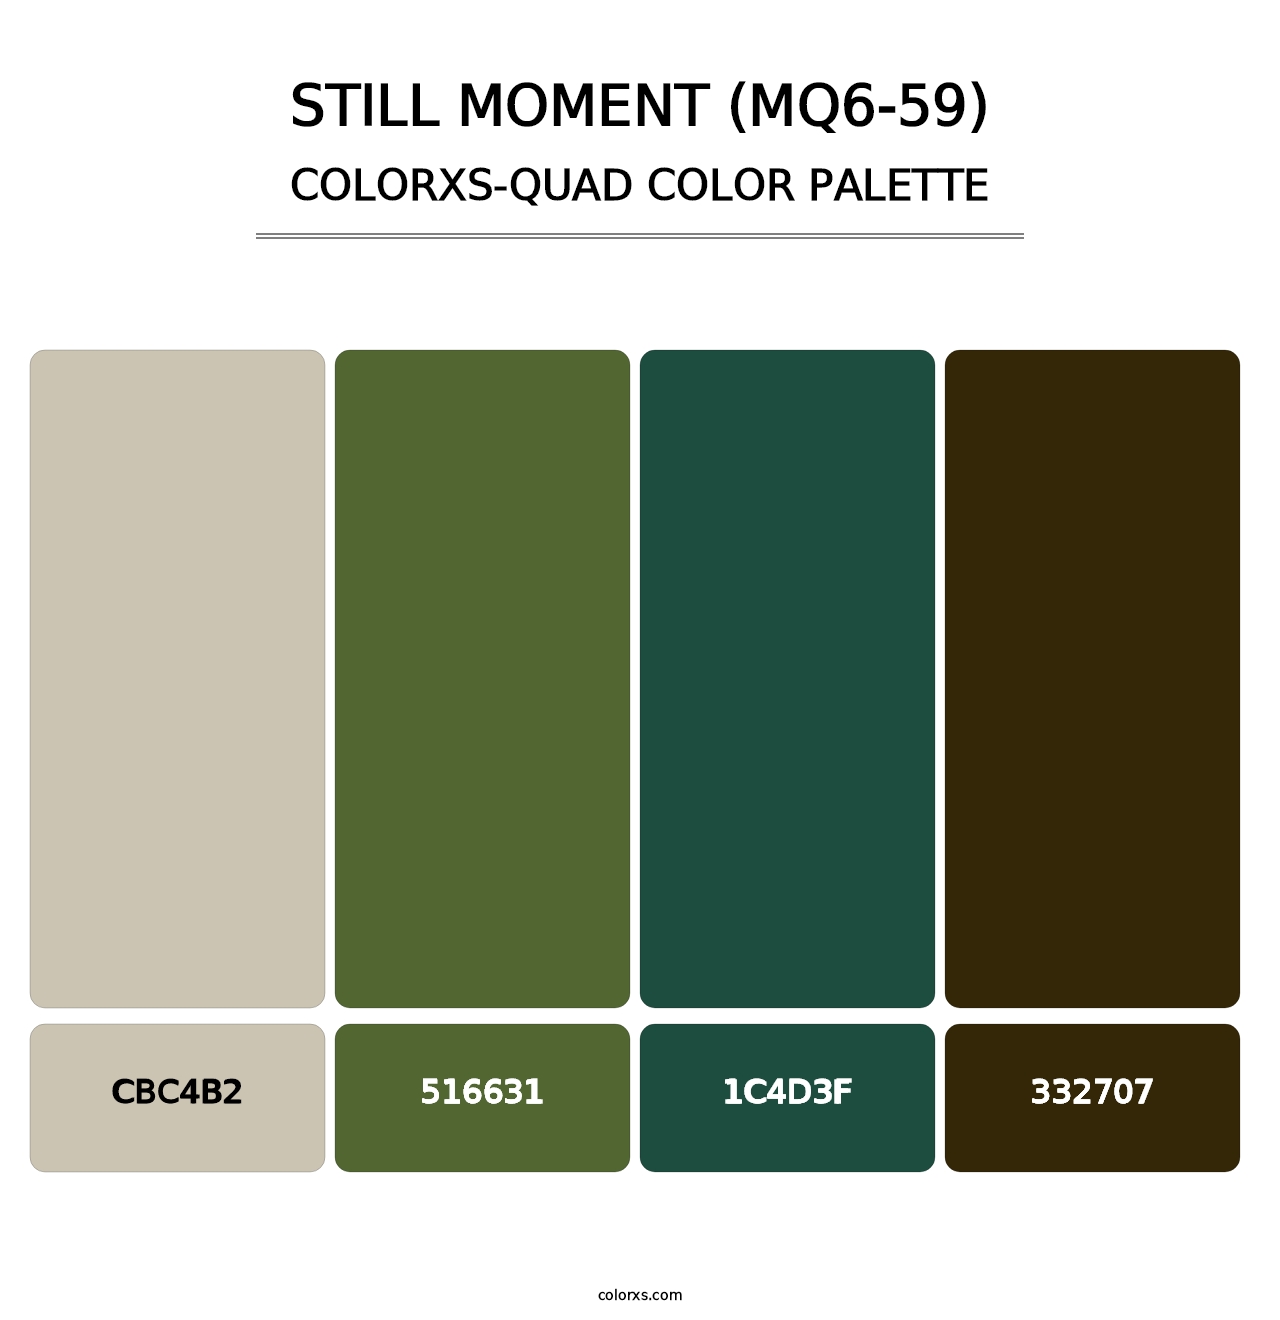 Still Moment (MQ6-59) - Colorxs Quad Palette